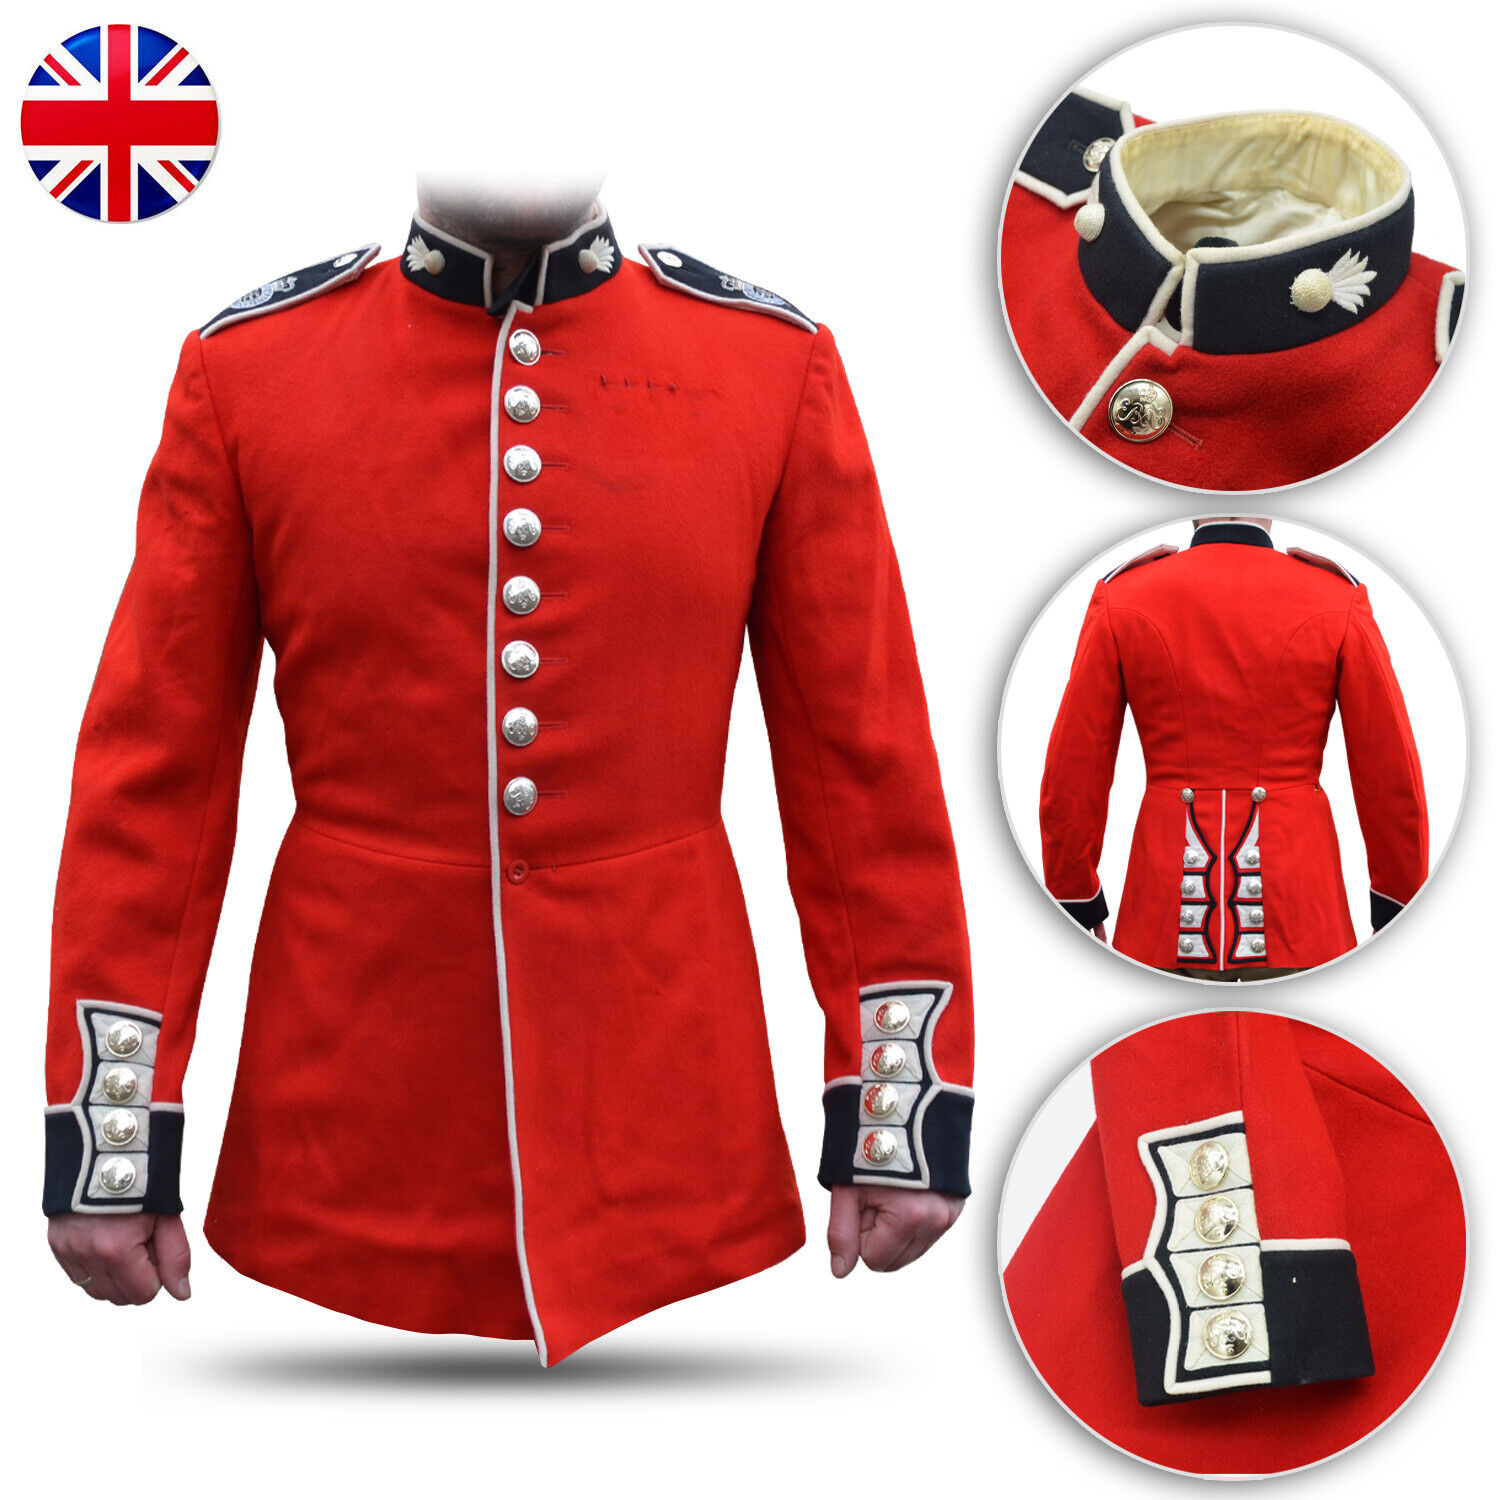 British Army Dress Uniform Jacket Tunic Red Wool Grenadier Guards Ceremony